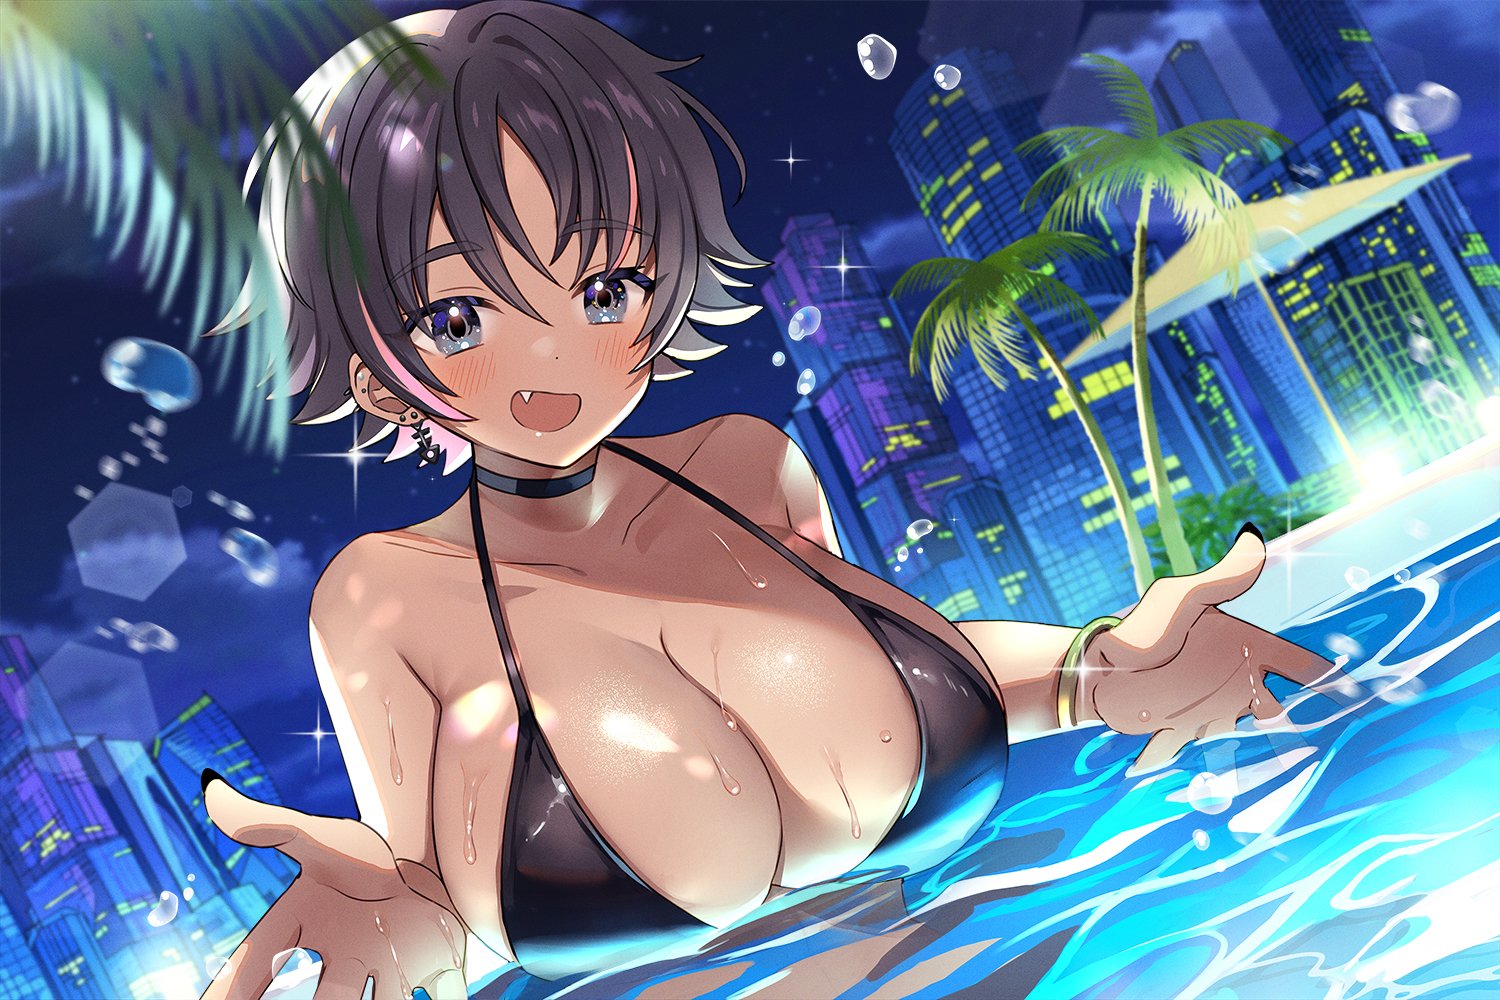 Anime 1500x1000 big boobs anime girls bikini cleavage blushing water in water palm trees night water drops choker bracelets building skyscraper umbrella earring looking at viewer dark skin